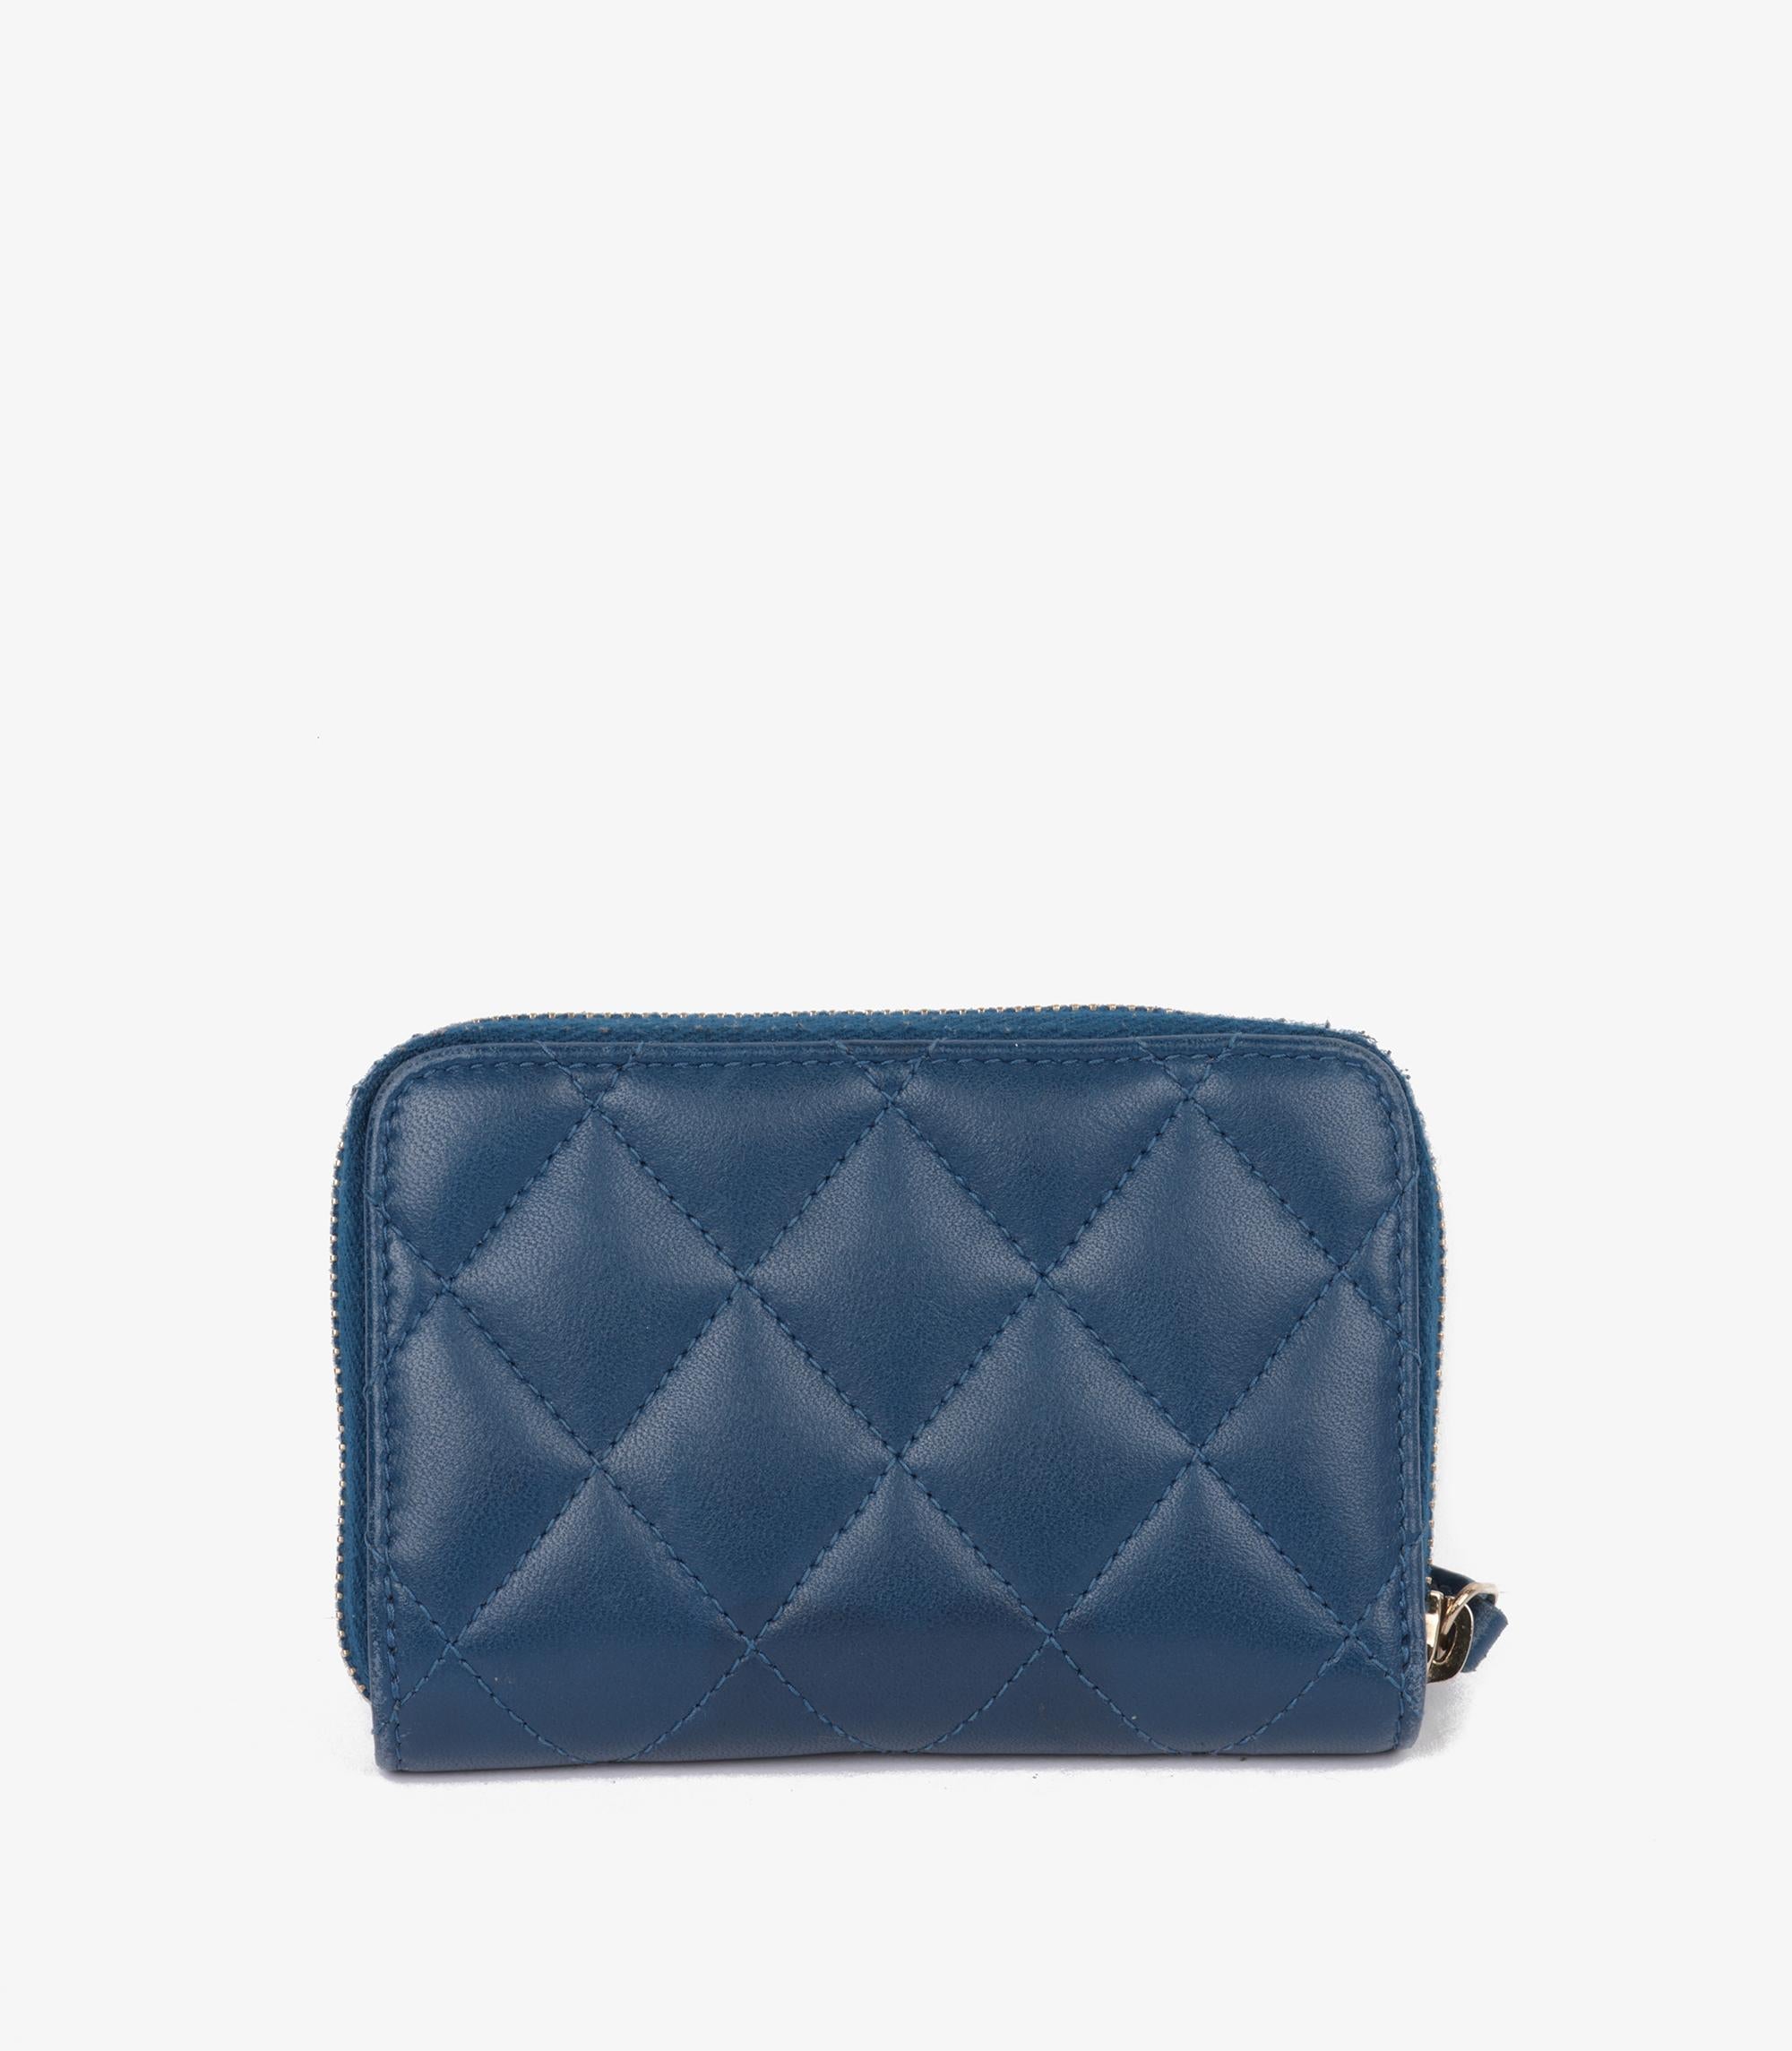 Chanel Blue Quilted Lambskin Leather Zip Around Cardholder In Good Condition For Sale In Bishop's Stortford, Hertfordshire